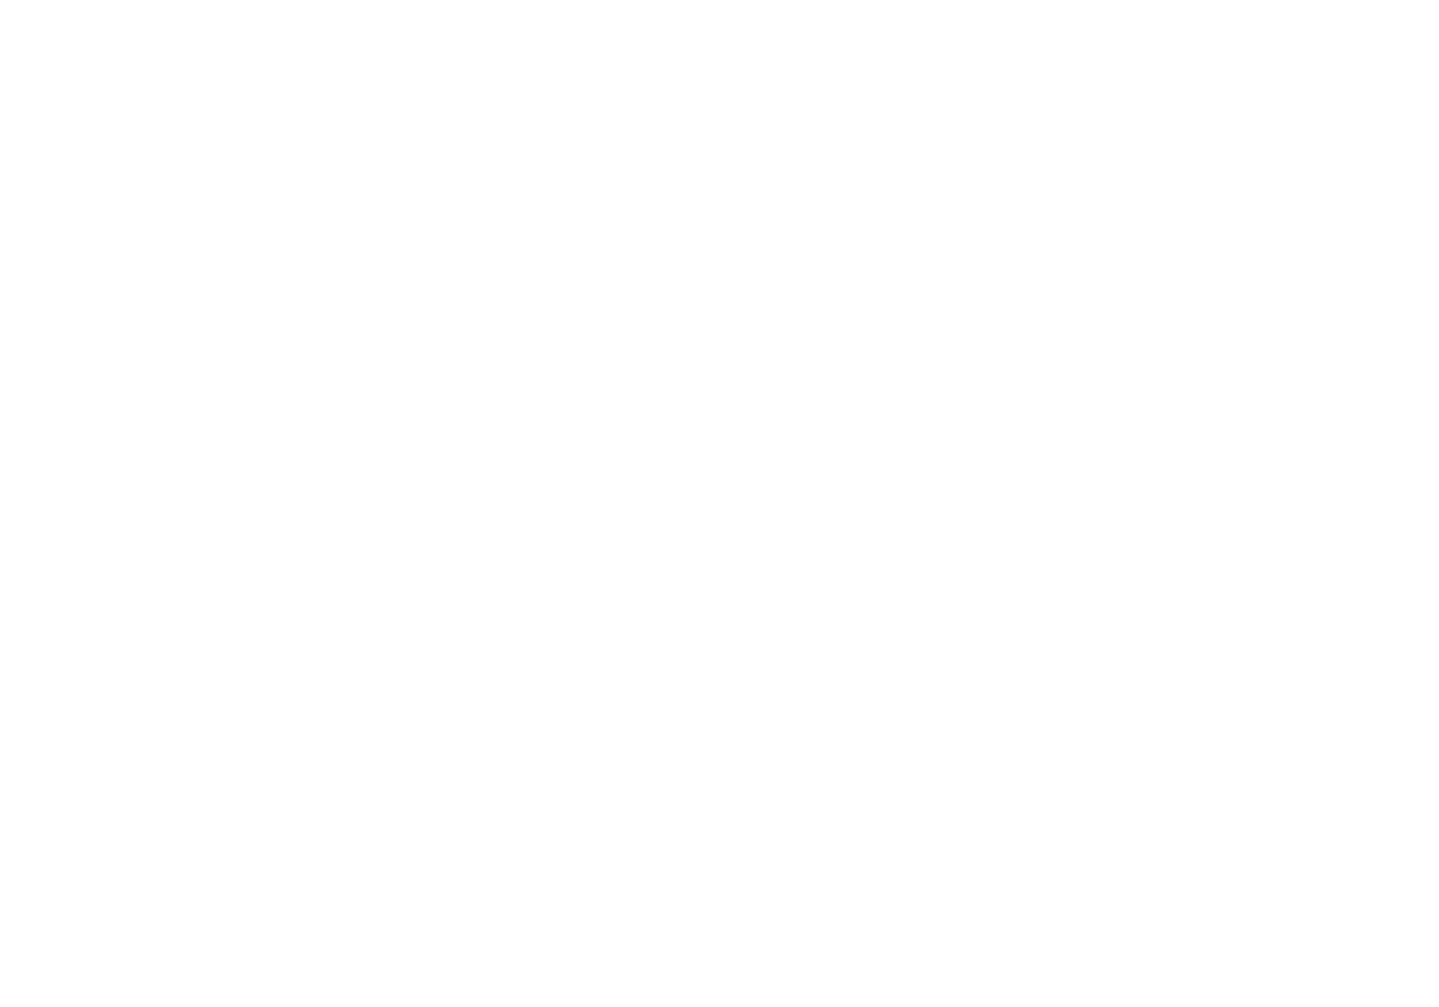 El Castell on the Llano River